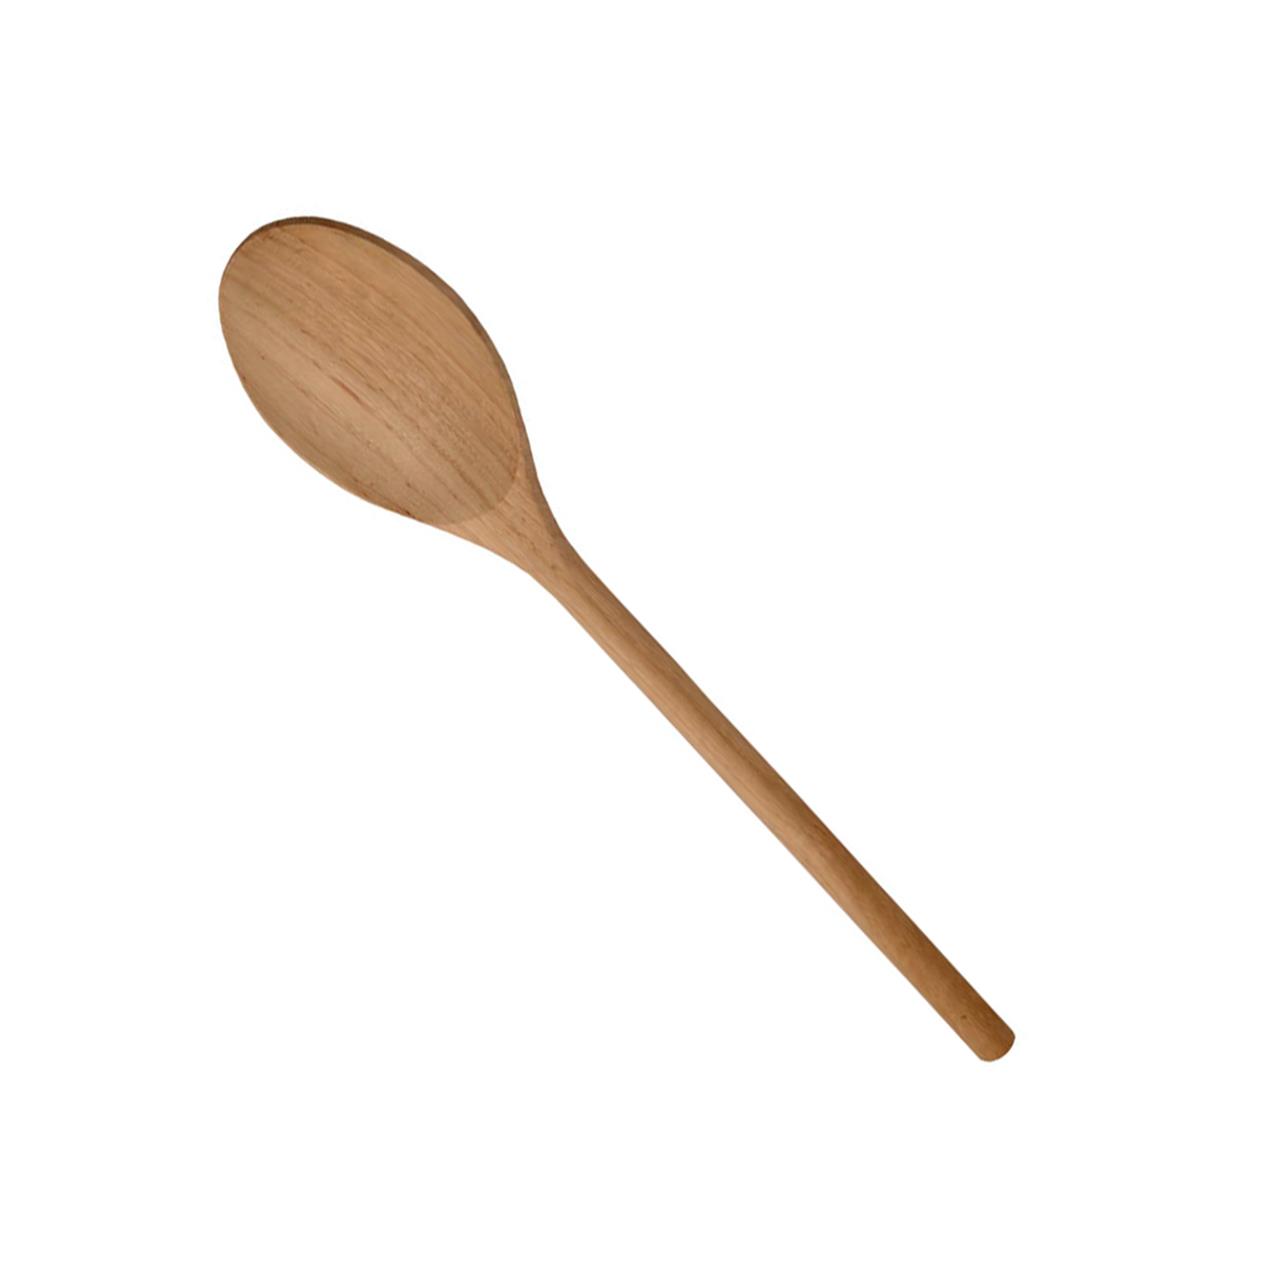 KH Wooden Spoon - KHA Hospitality Importer And Wholesaler